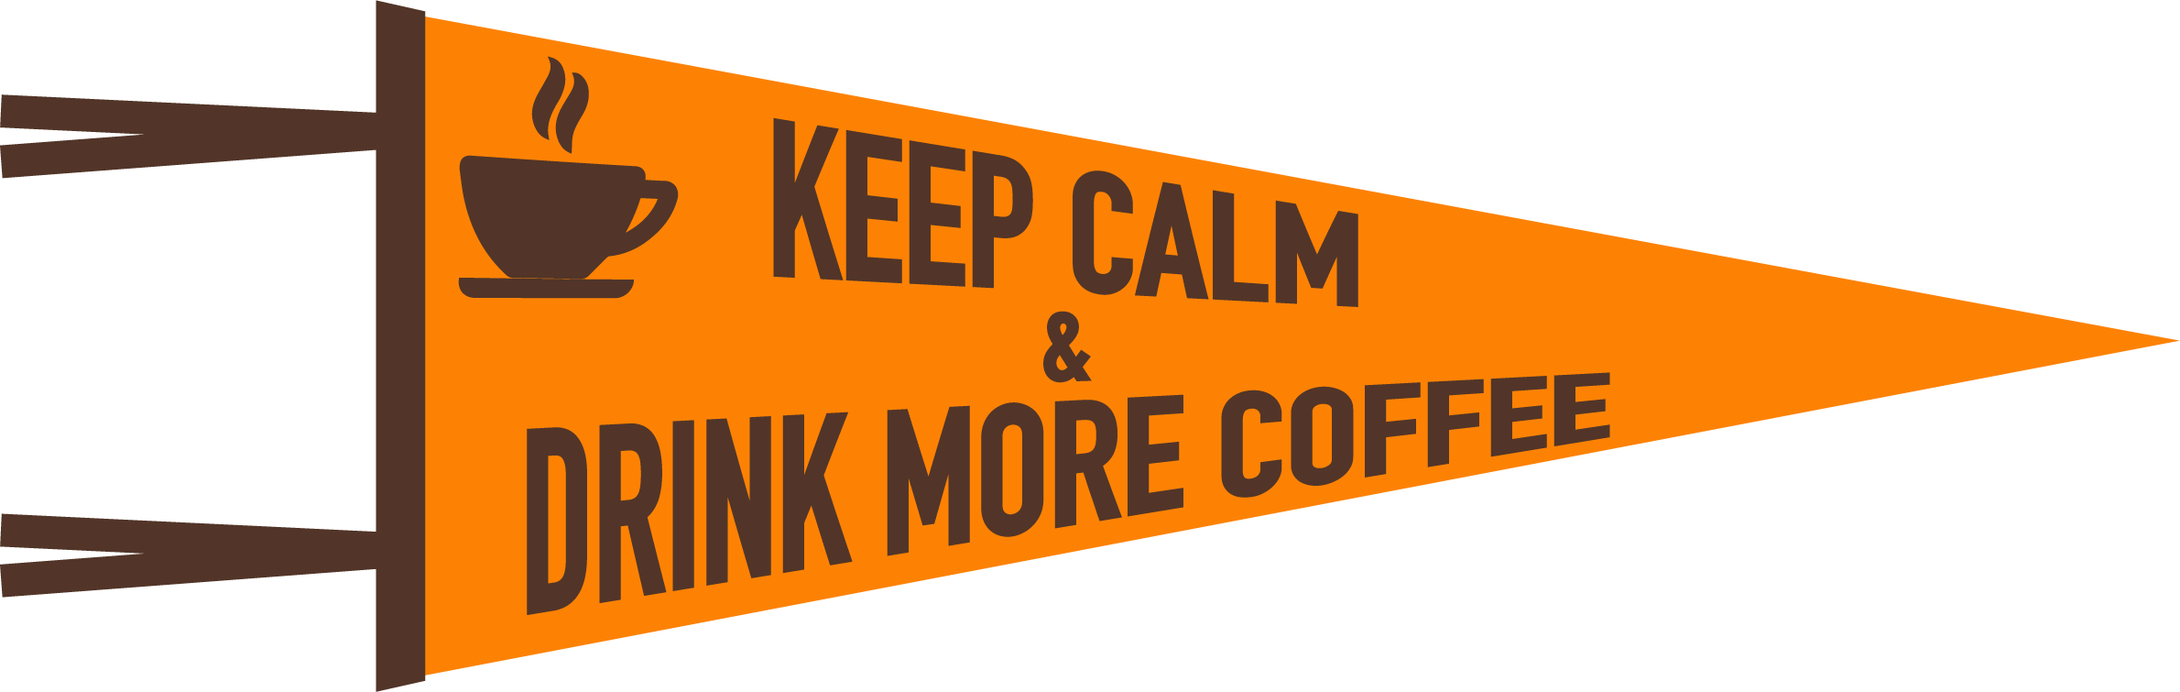 Keep Calm & Drink More Coffee Pennant Flag